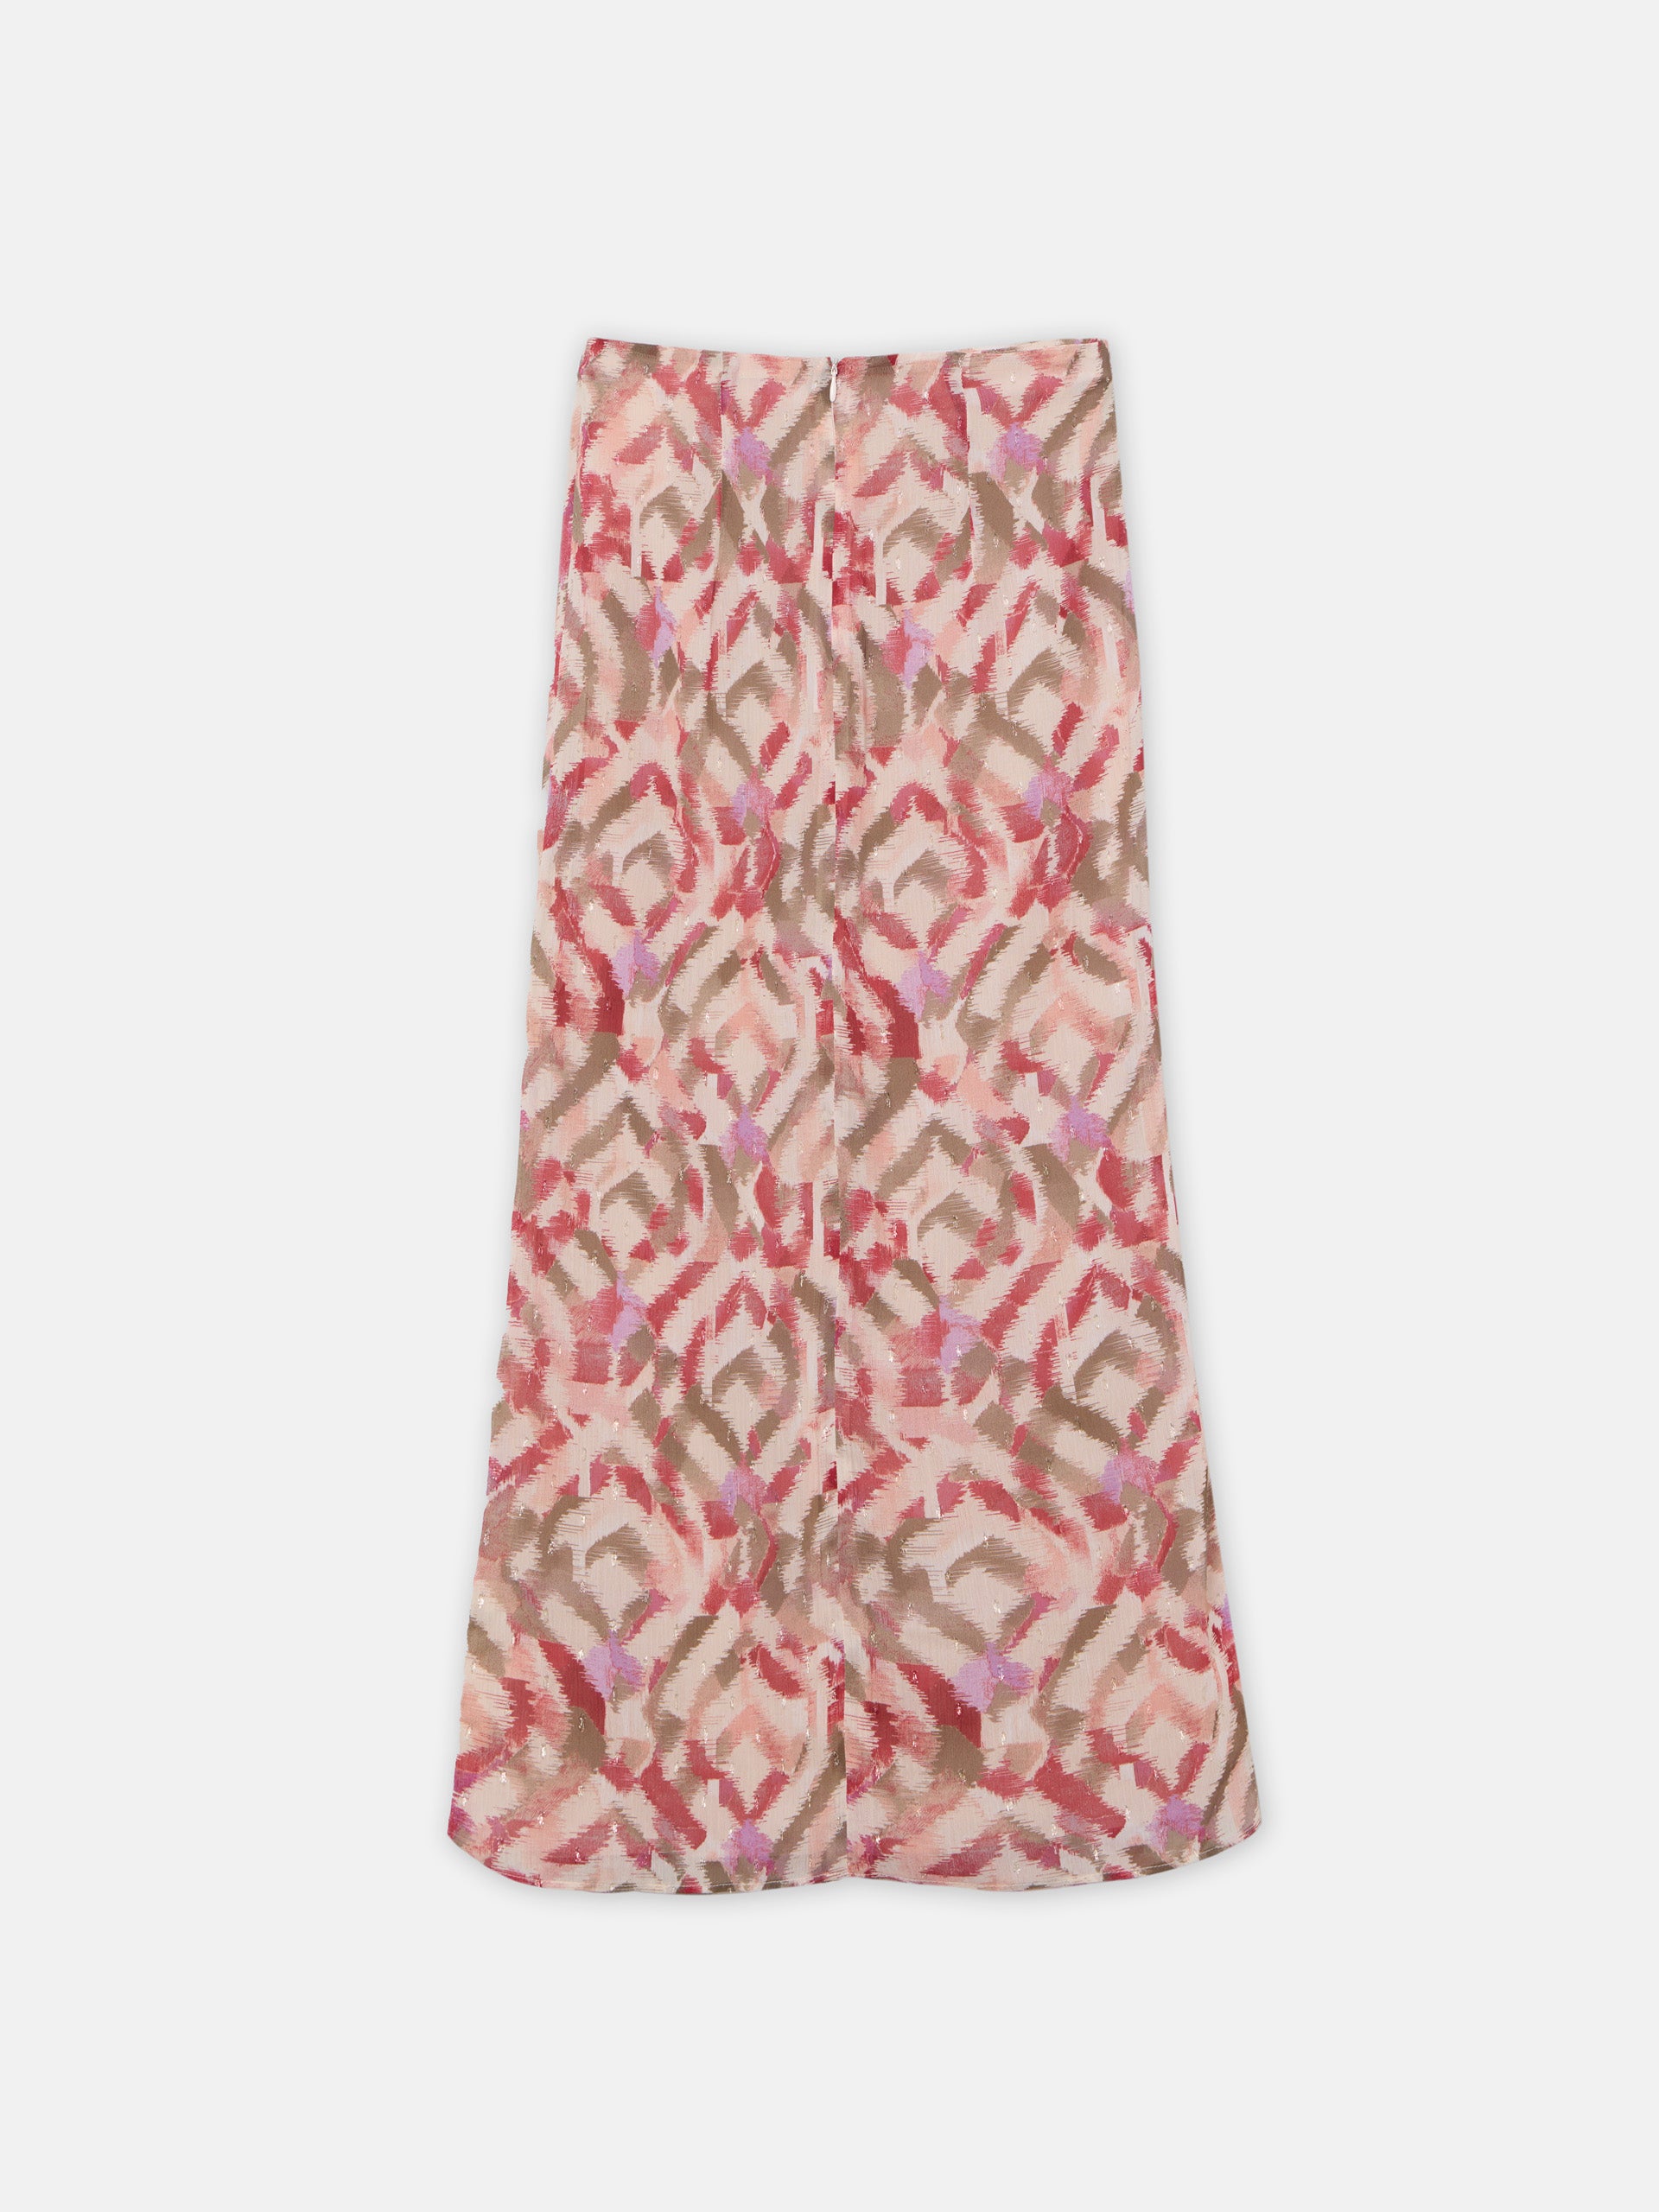 Unique printed women's skirt